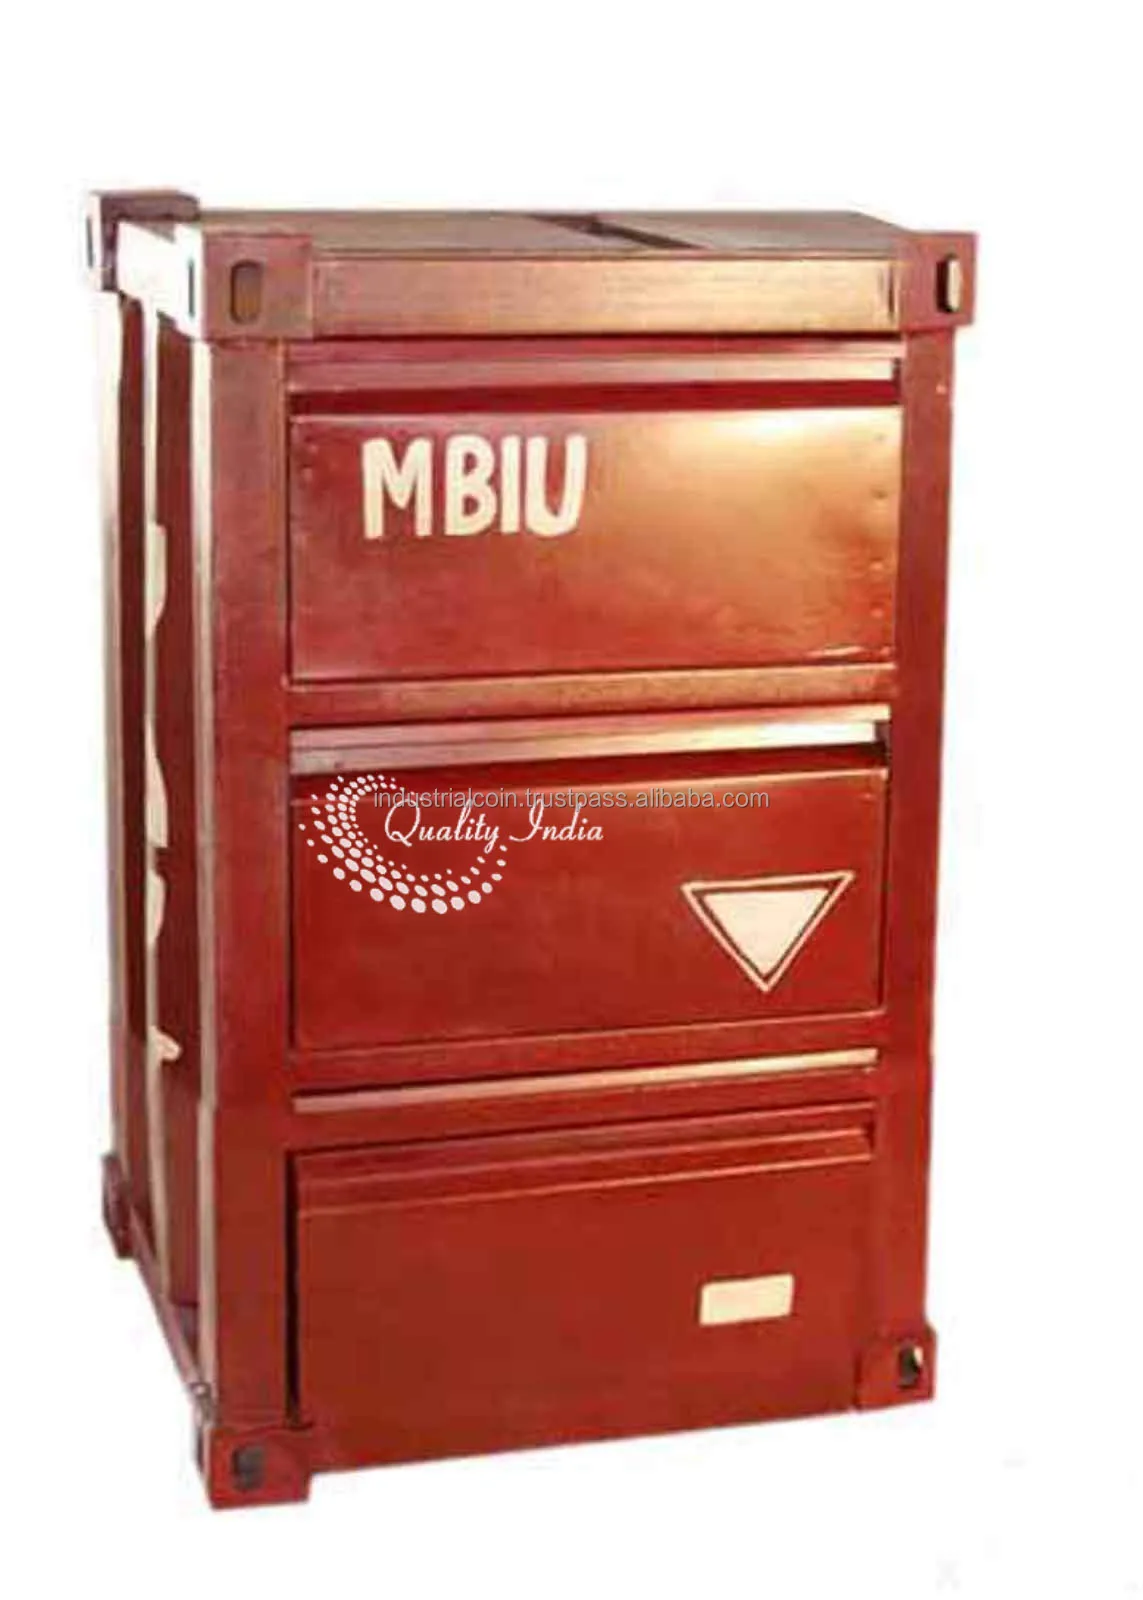 Mbiu Container Shape Red Metallic Cabinet Buy Vintage Metal